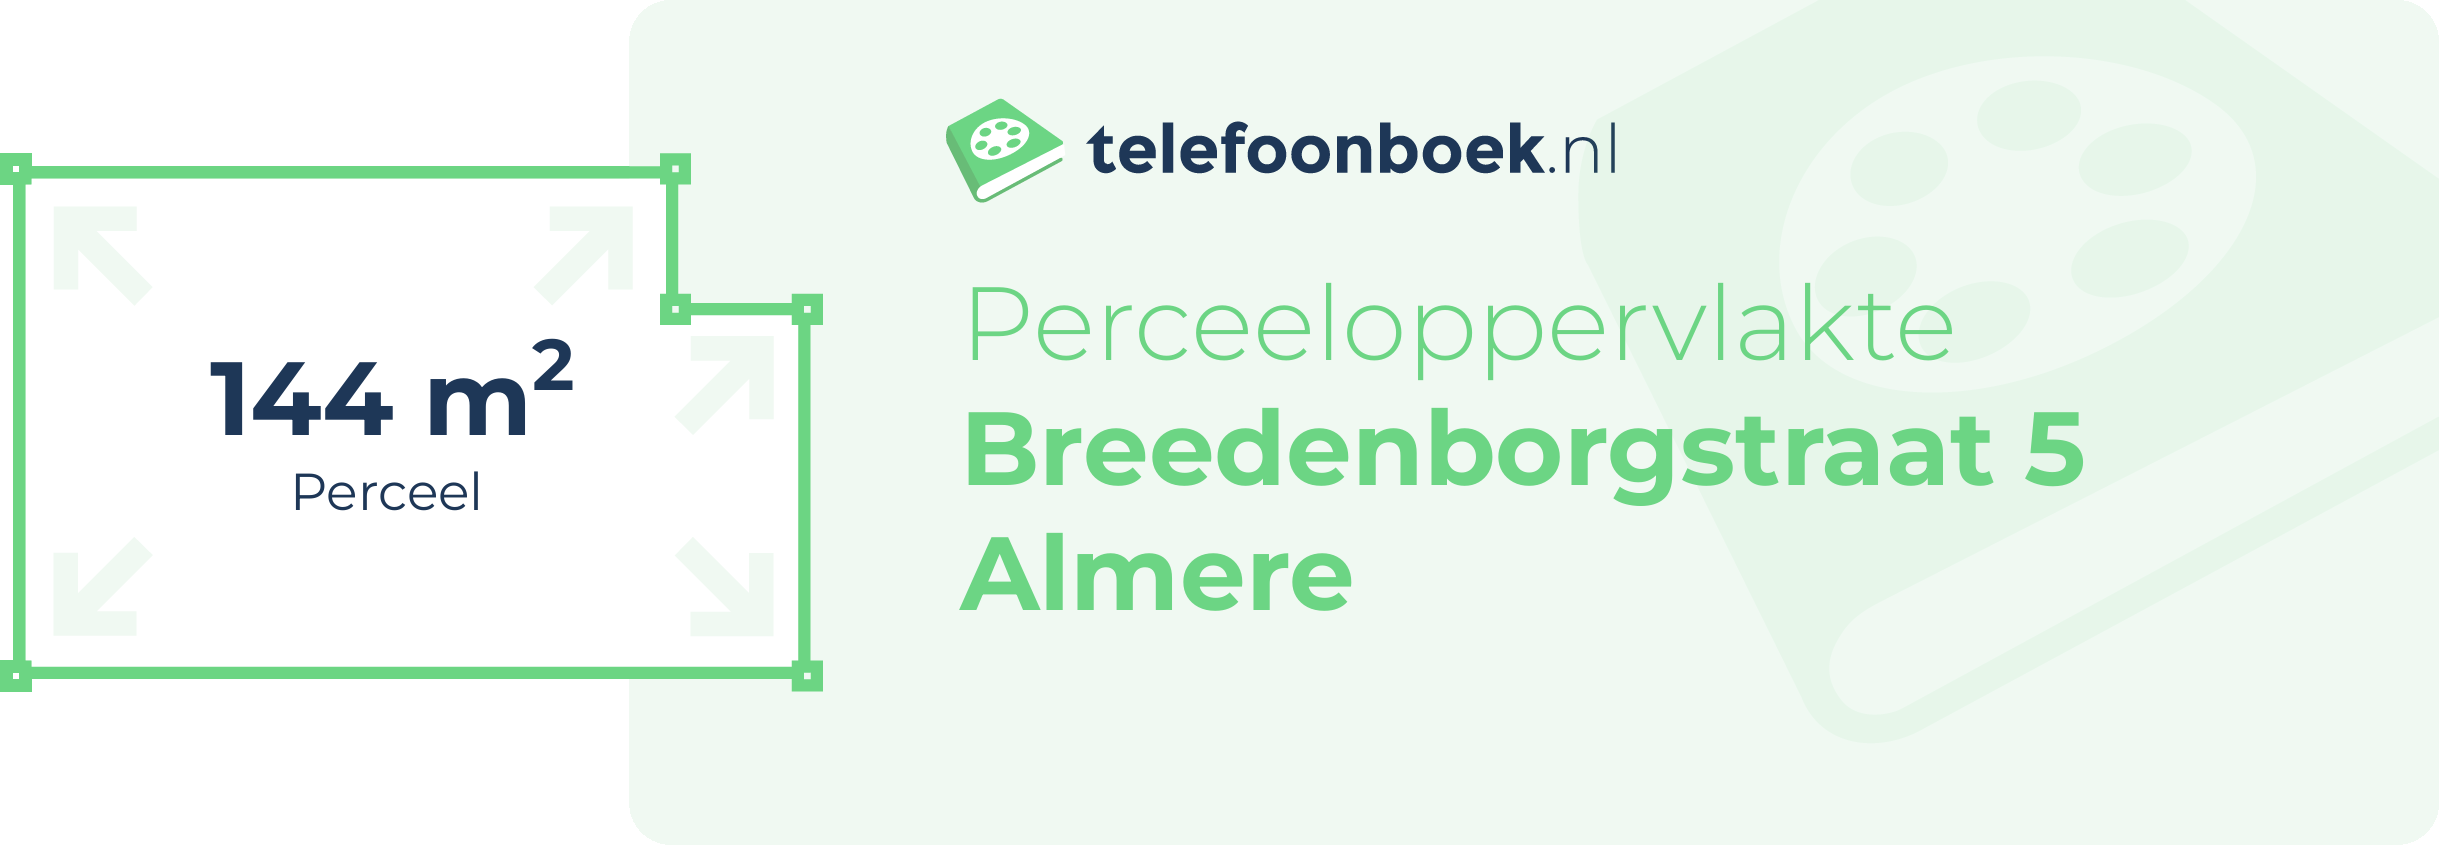 Perceeloppervlakte Breedenborgstraat 5 Almere